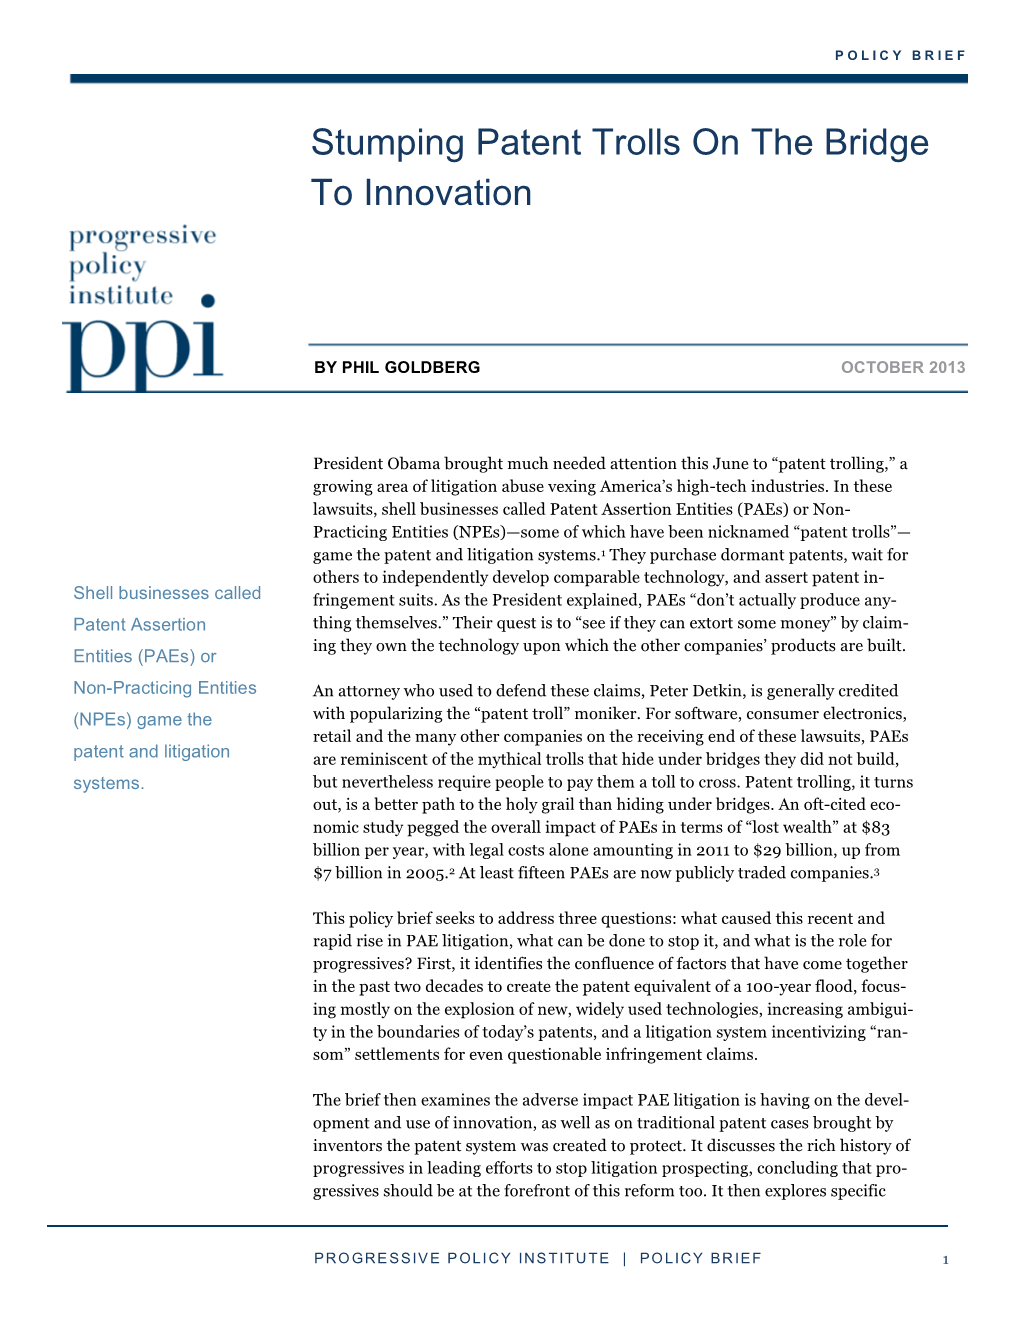 Stumping Patent Trolls on the Bridge to Innovation